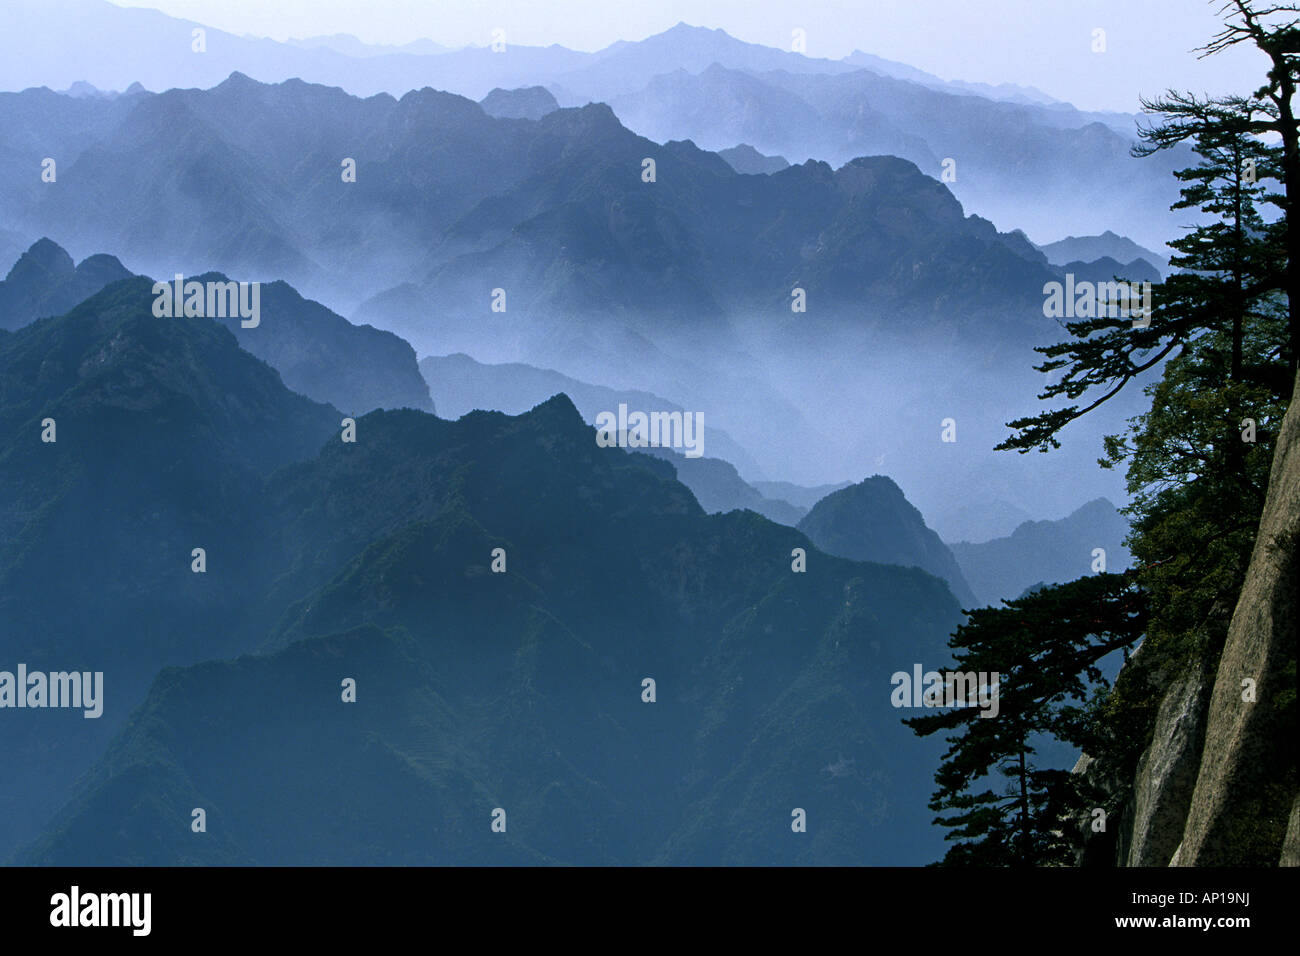 cliffs at south Peak, pine trees, mountain scenery, Hua Shan, Shaanxi province, Taoist mountain, China, Asia Stock Photo